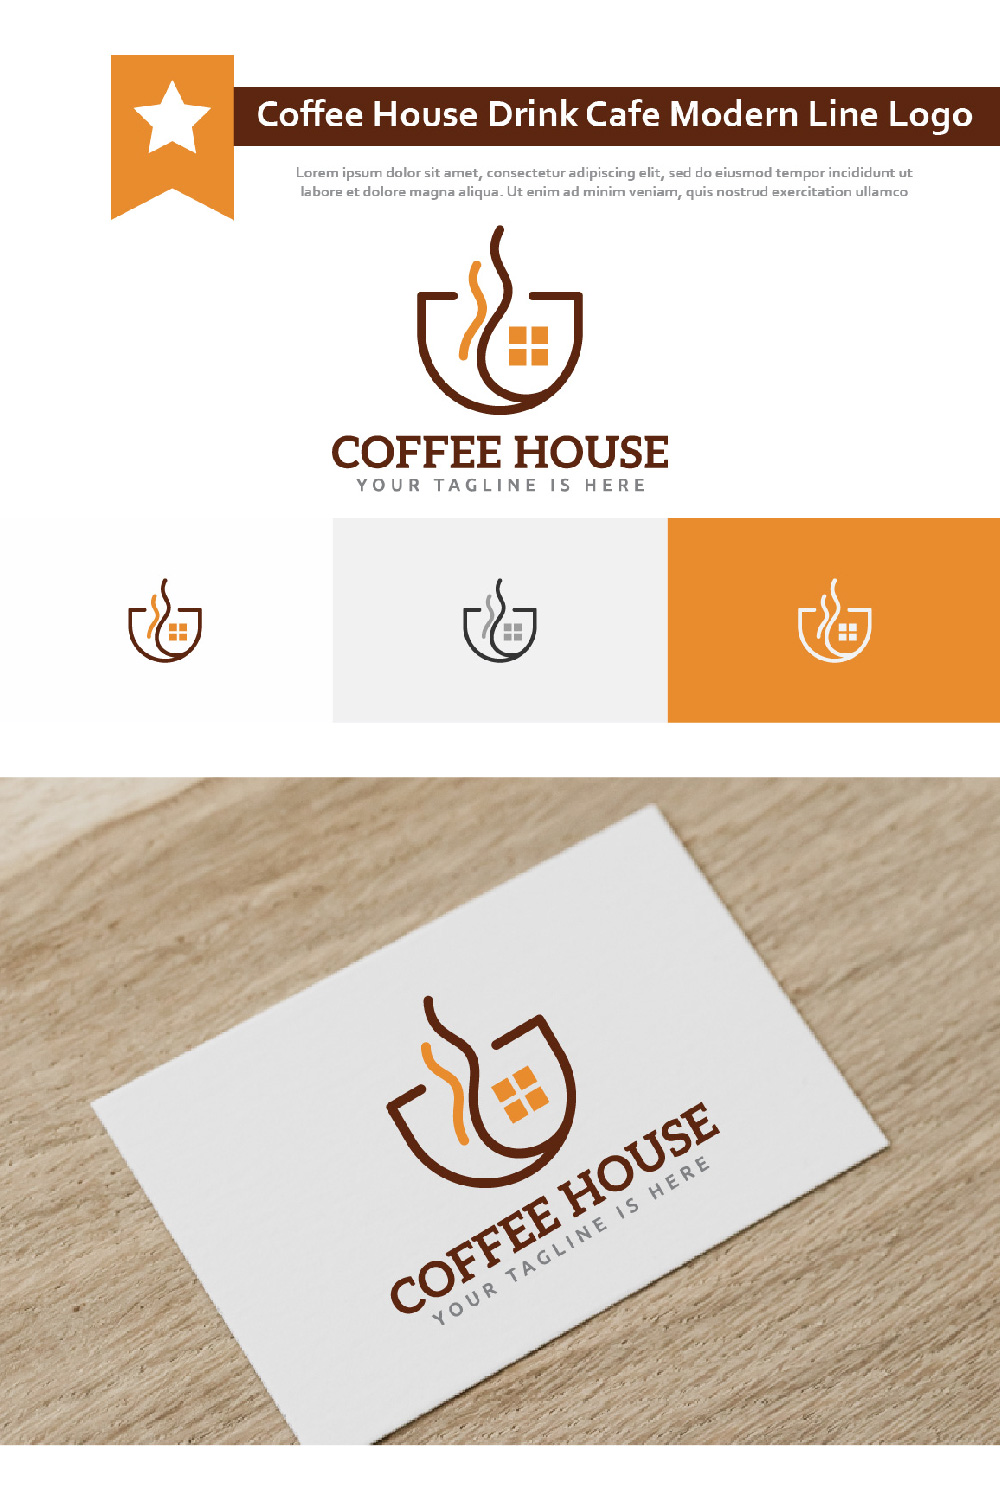 Coffee House Drink Cafe Modern Simple Line Logo pinterest.